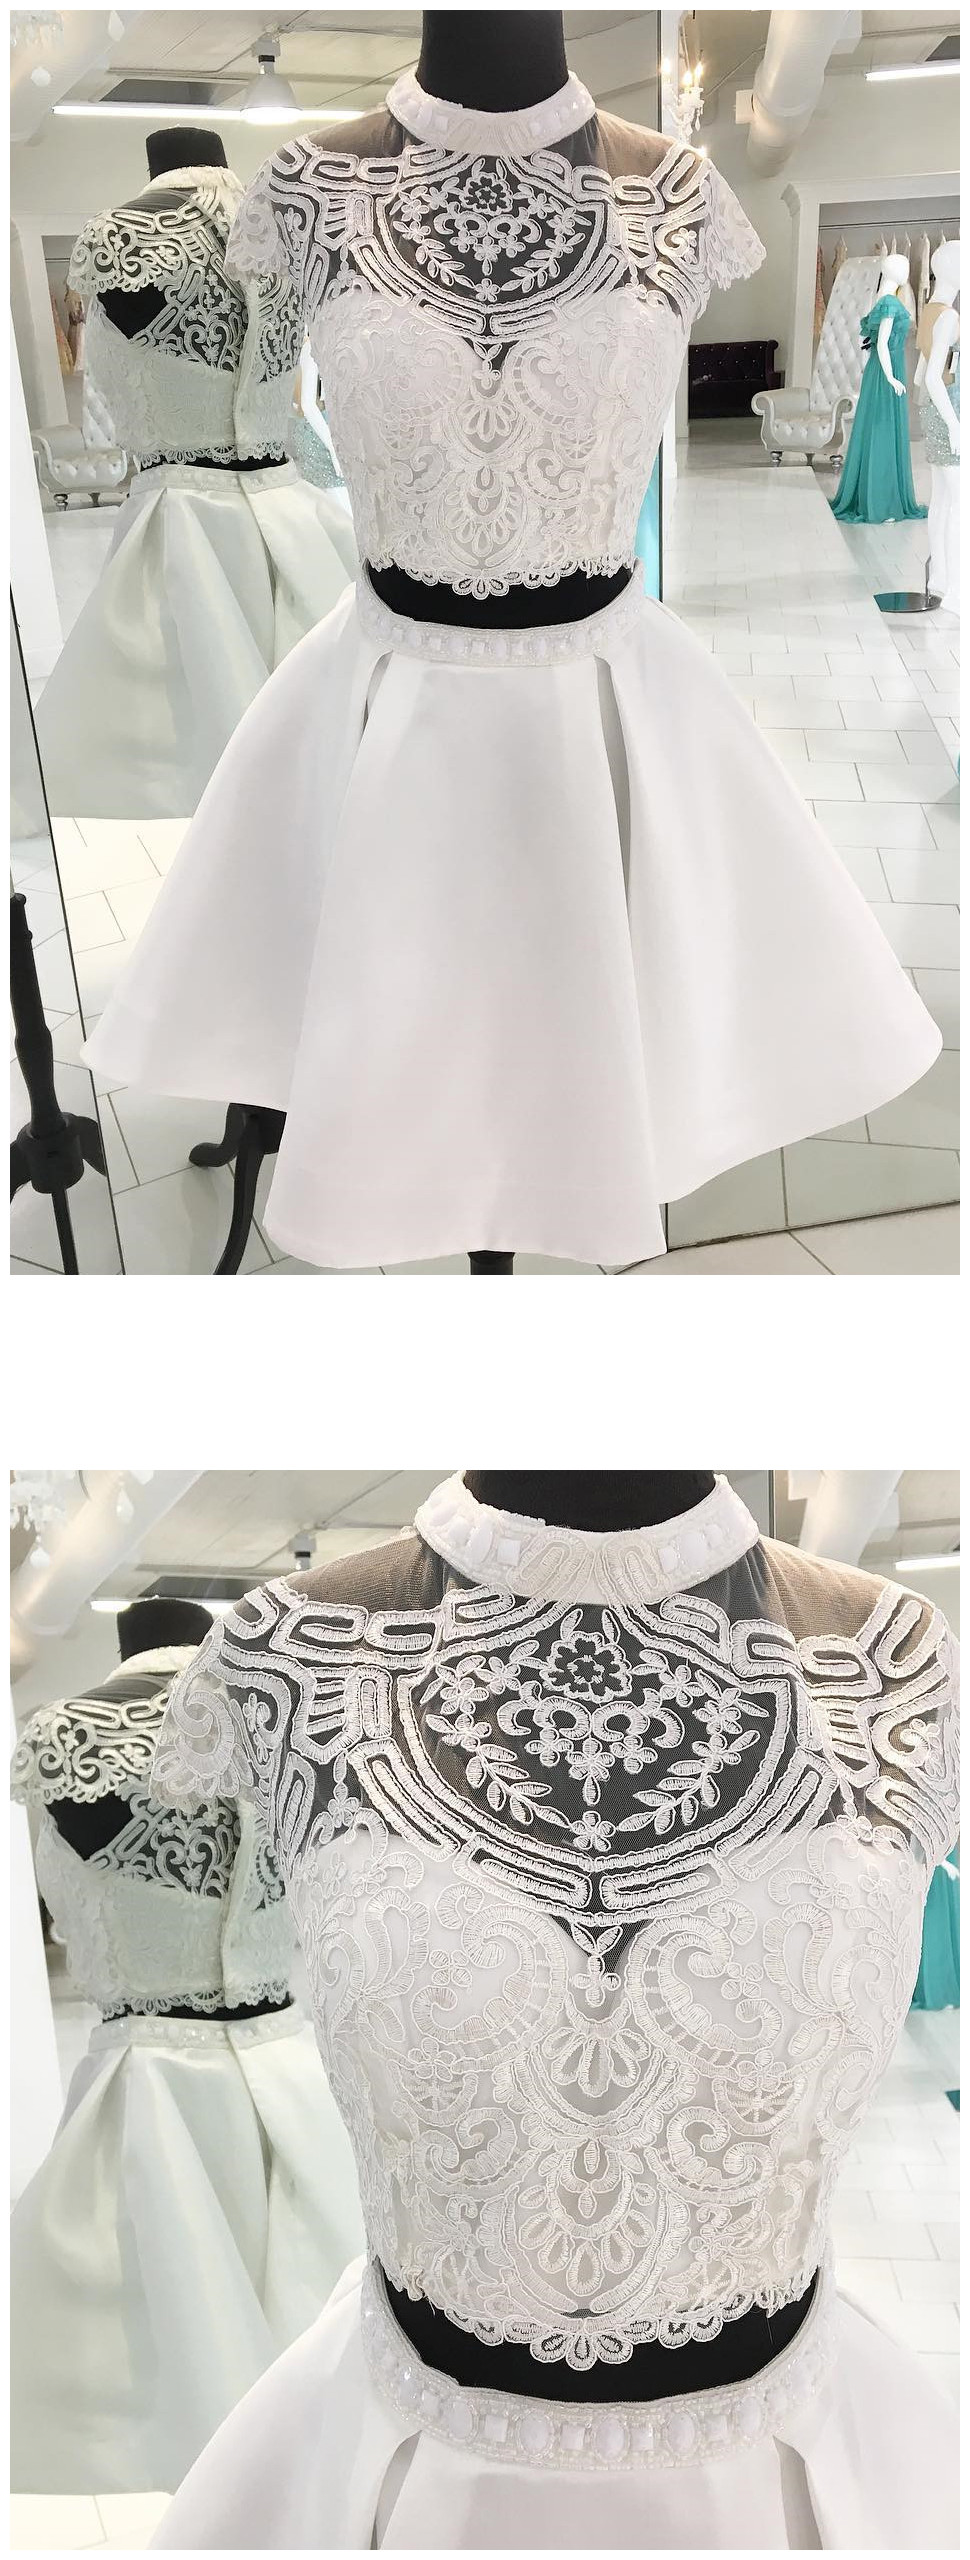 White Short Prom Dresses, White High Neck Homecoming Dresses, Beads Homecoming Dresses, Two Piece Homecoming Dress